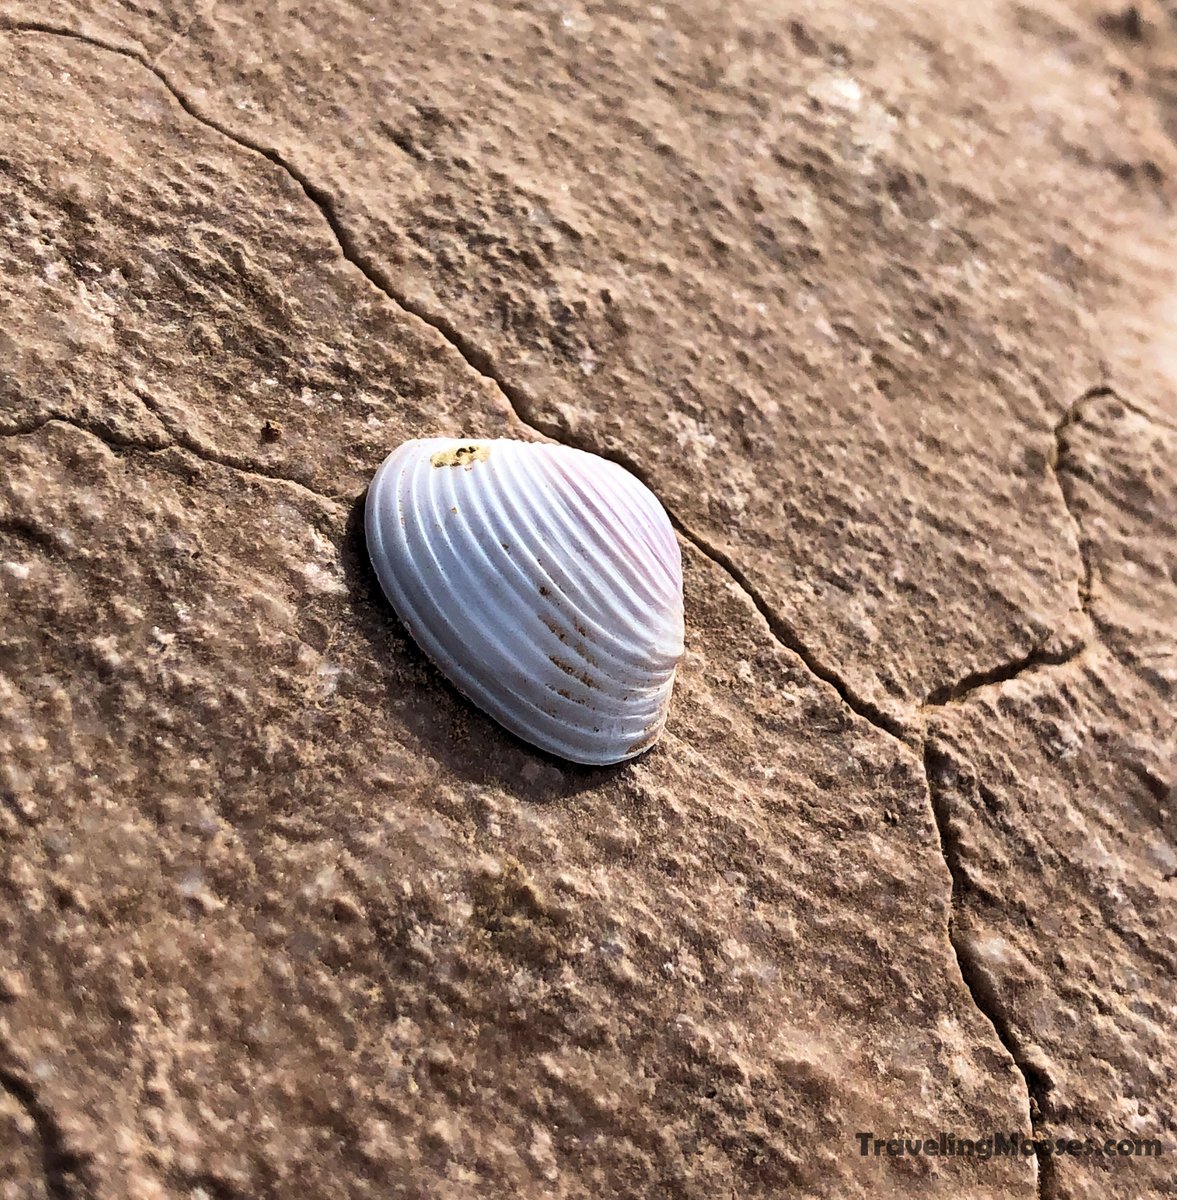 #clam #hiking #secrettreasures #nevada #deserthiking #nature #travelingmooses 

In the heart of the desert...